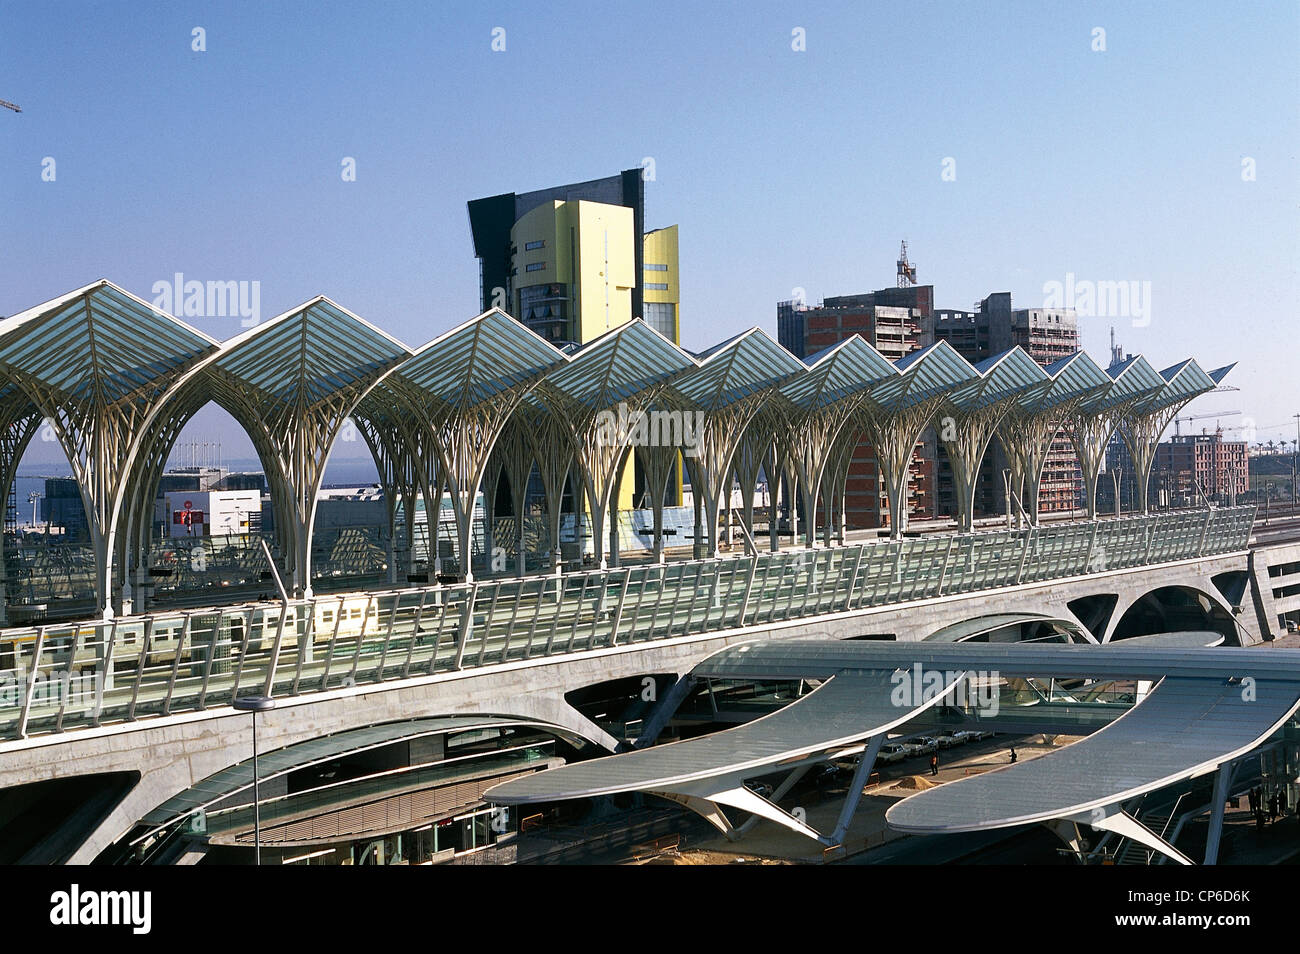 Portugal - Lisbon - Expo '98. Oriente station, architect Santiago Calatrava. Stock Photo